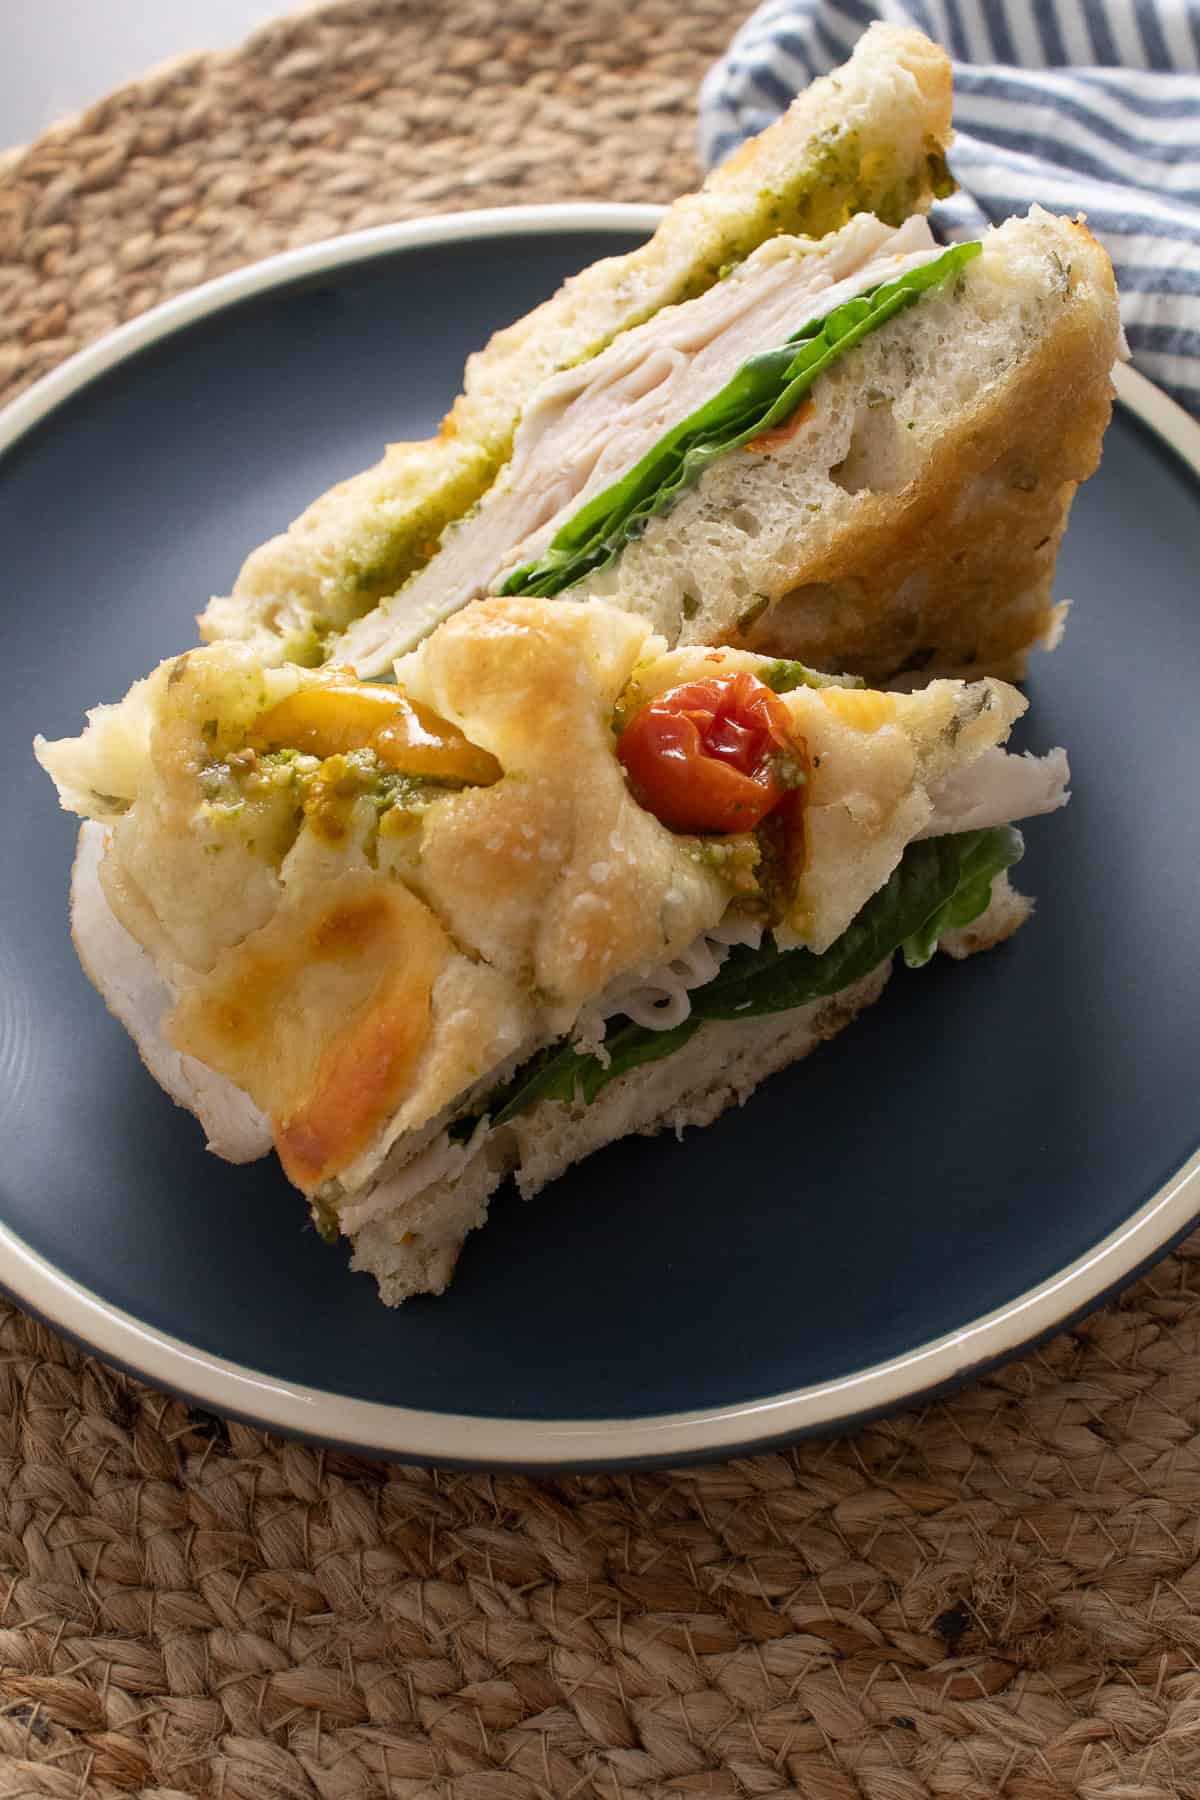 A turkey sandwich made on caprese focaccia bread sitting on a blue plate.